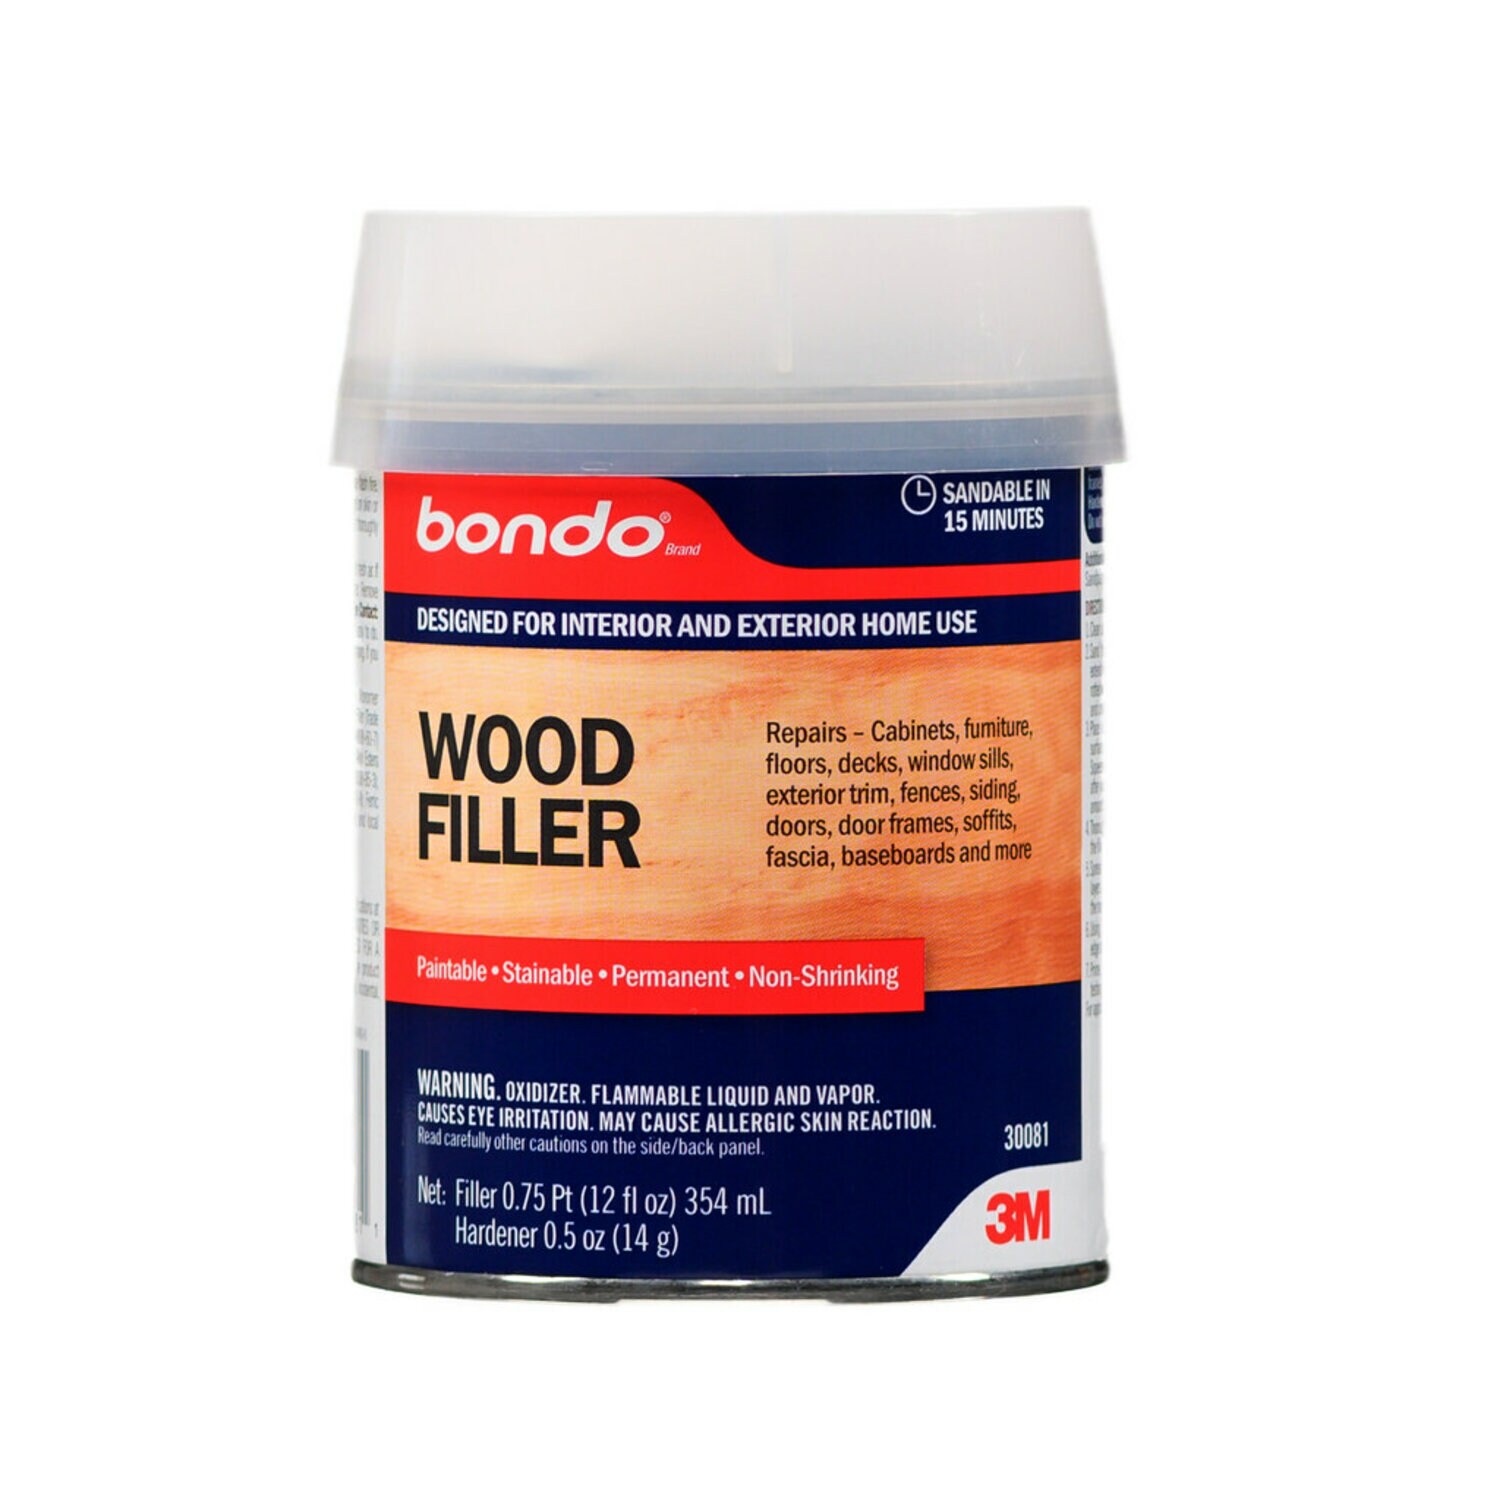 7010308801 - Bondo Wood Filler, 30081, 0.75 Pint, 4 per case